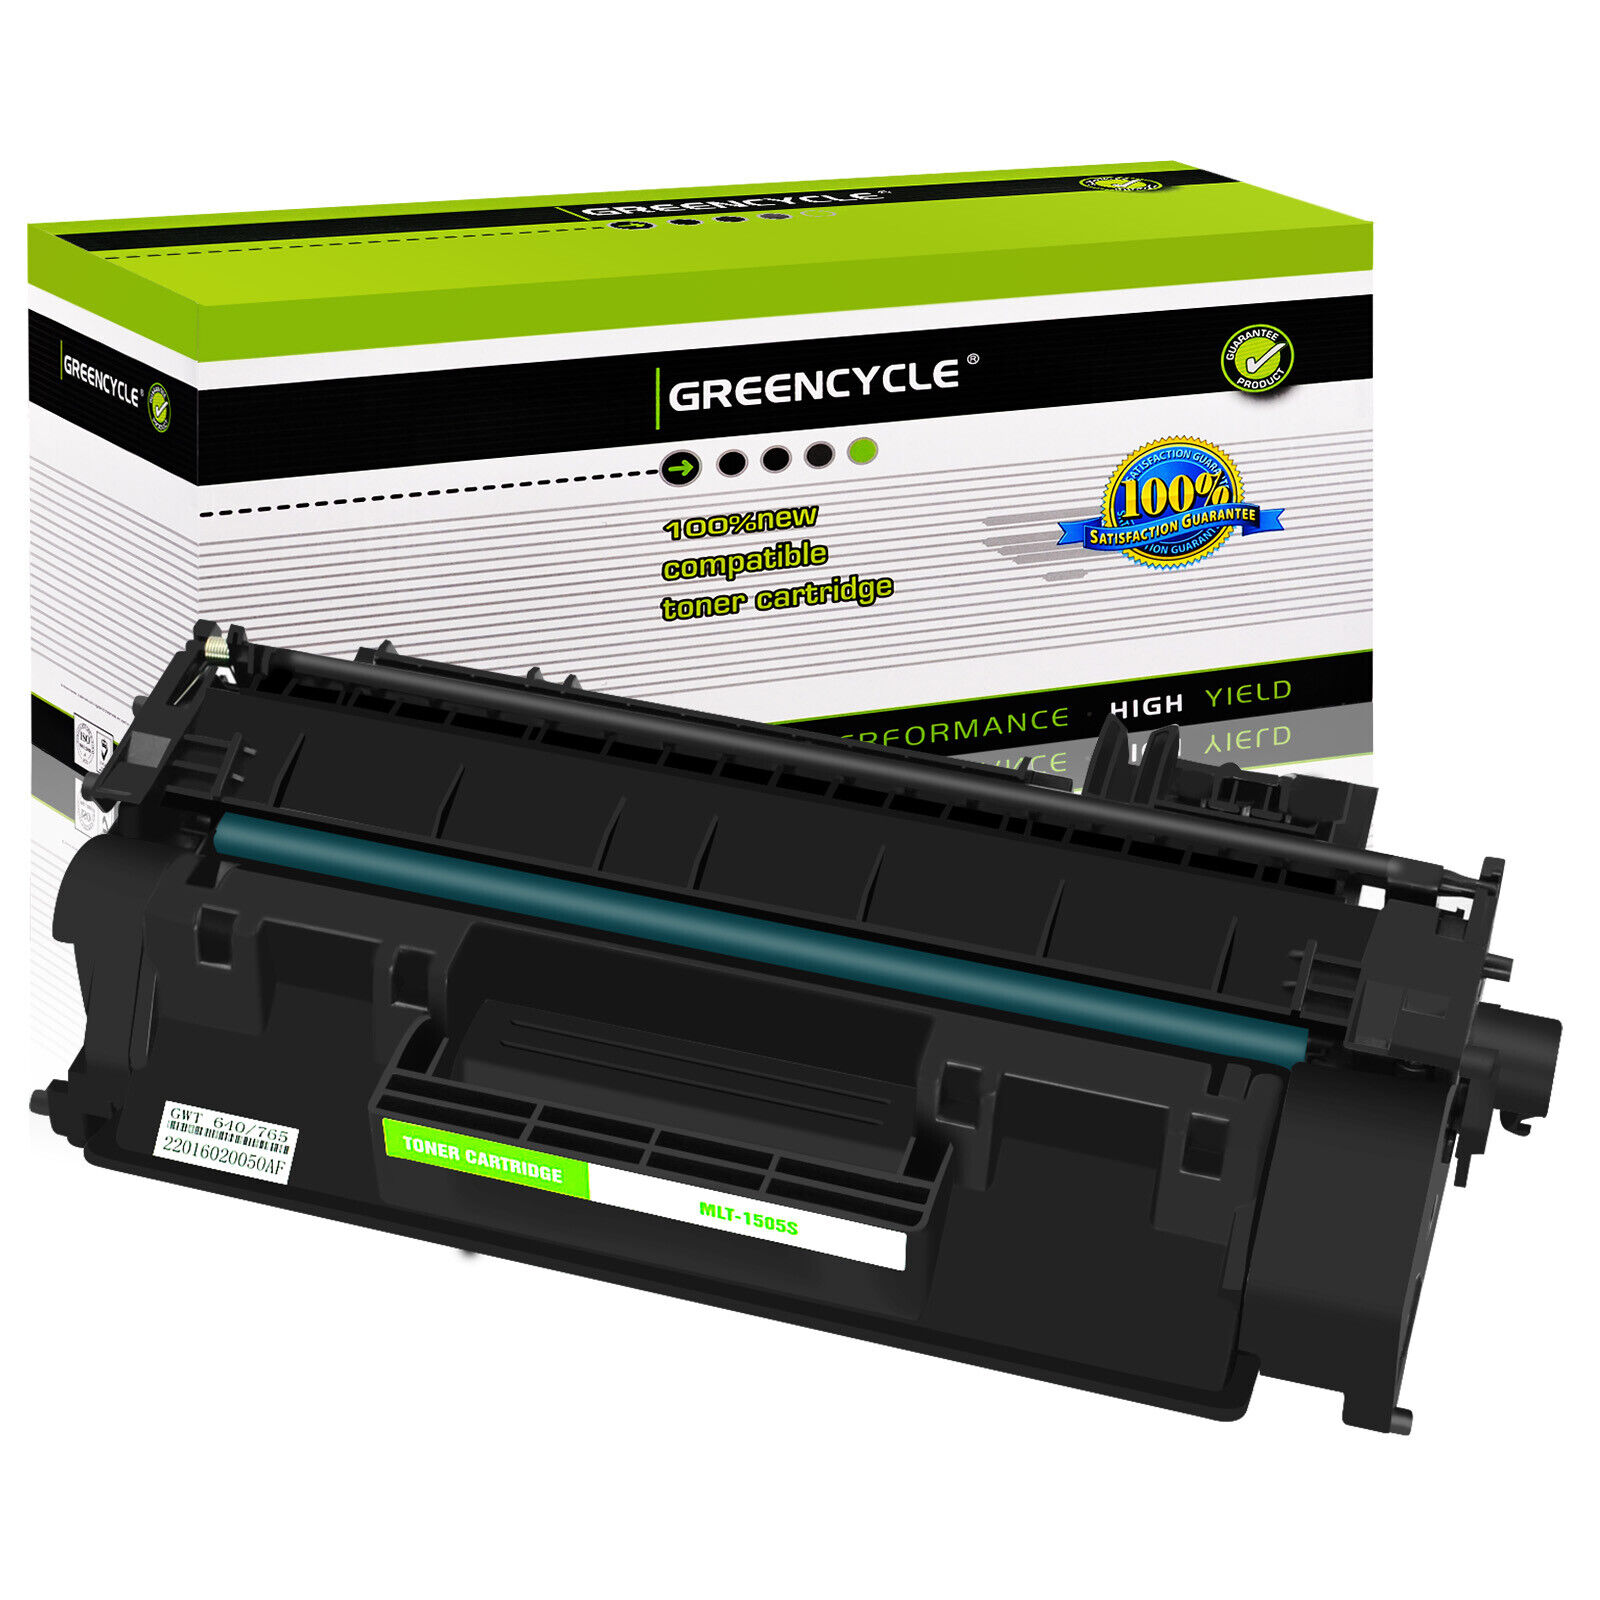 1-4PK Toner Cartridge for HP CE505A 05A LaserJet P2035 P2050 P2030 P2035 Printer